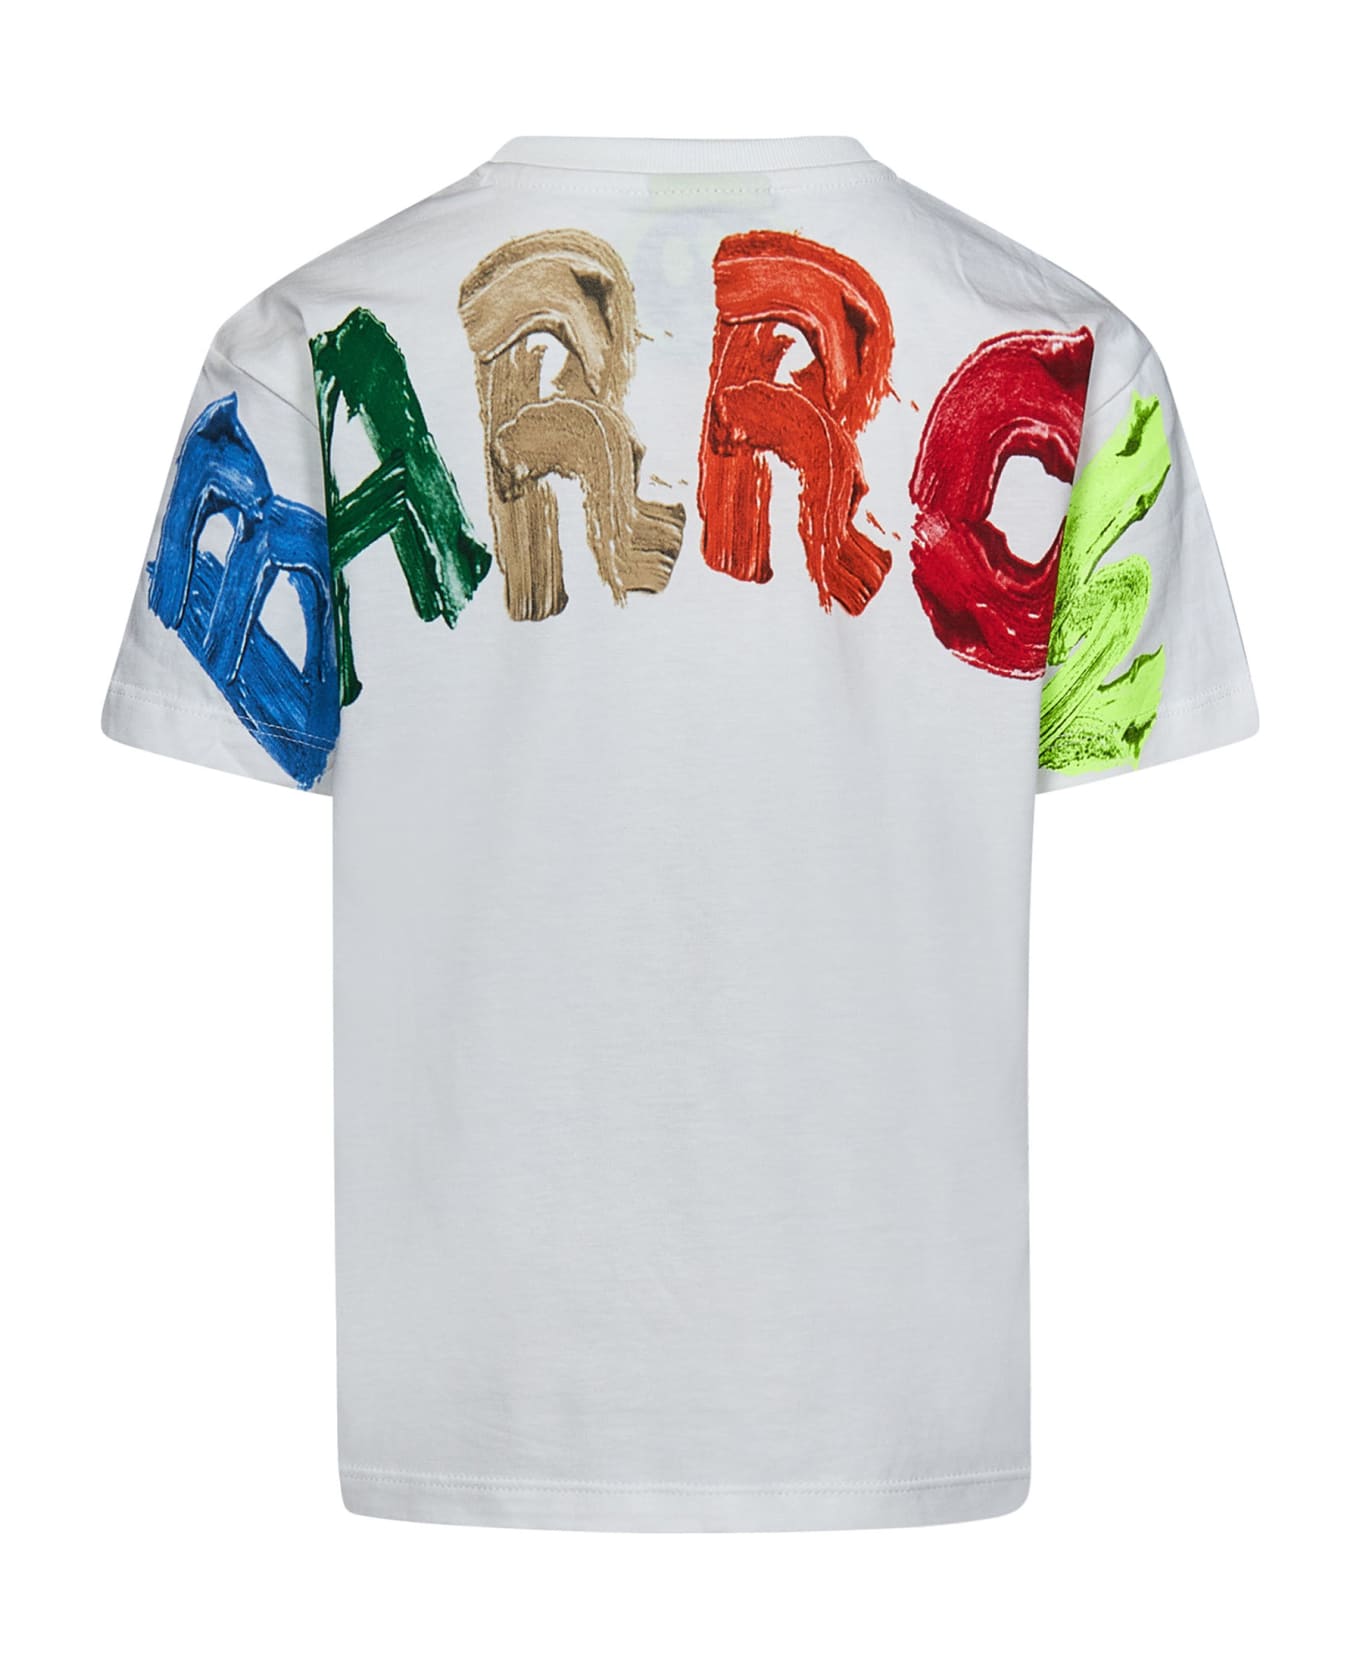 Barrow T-shirt - Bianco